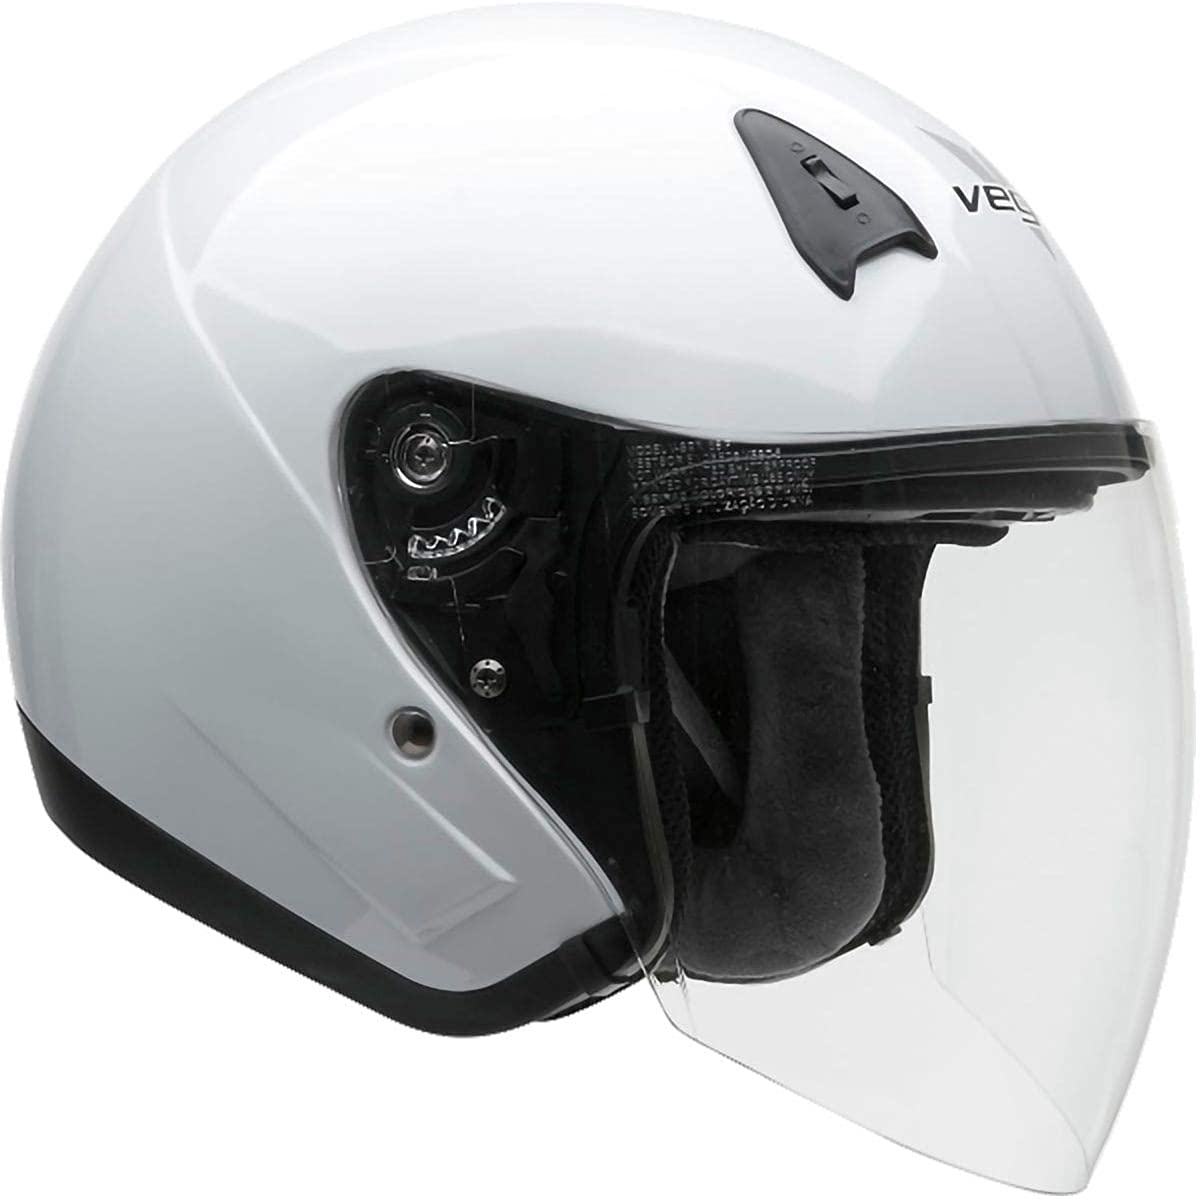 Buy Vega Helmets Open-face-helmet-style Vts1 VTS1 3/4 Open Face Helmet  Pearl Online in Taiwan. B07N8QR5V6